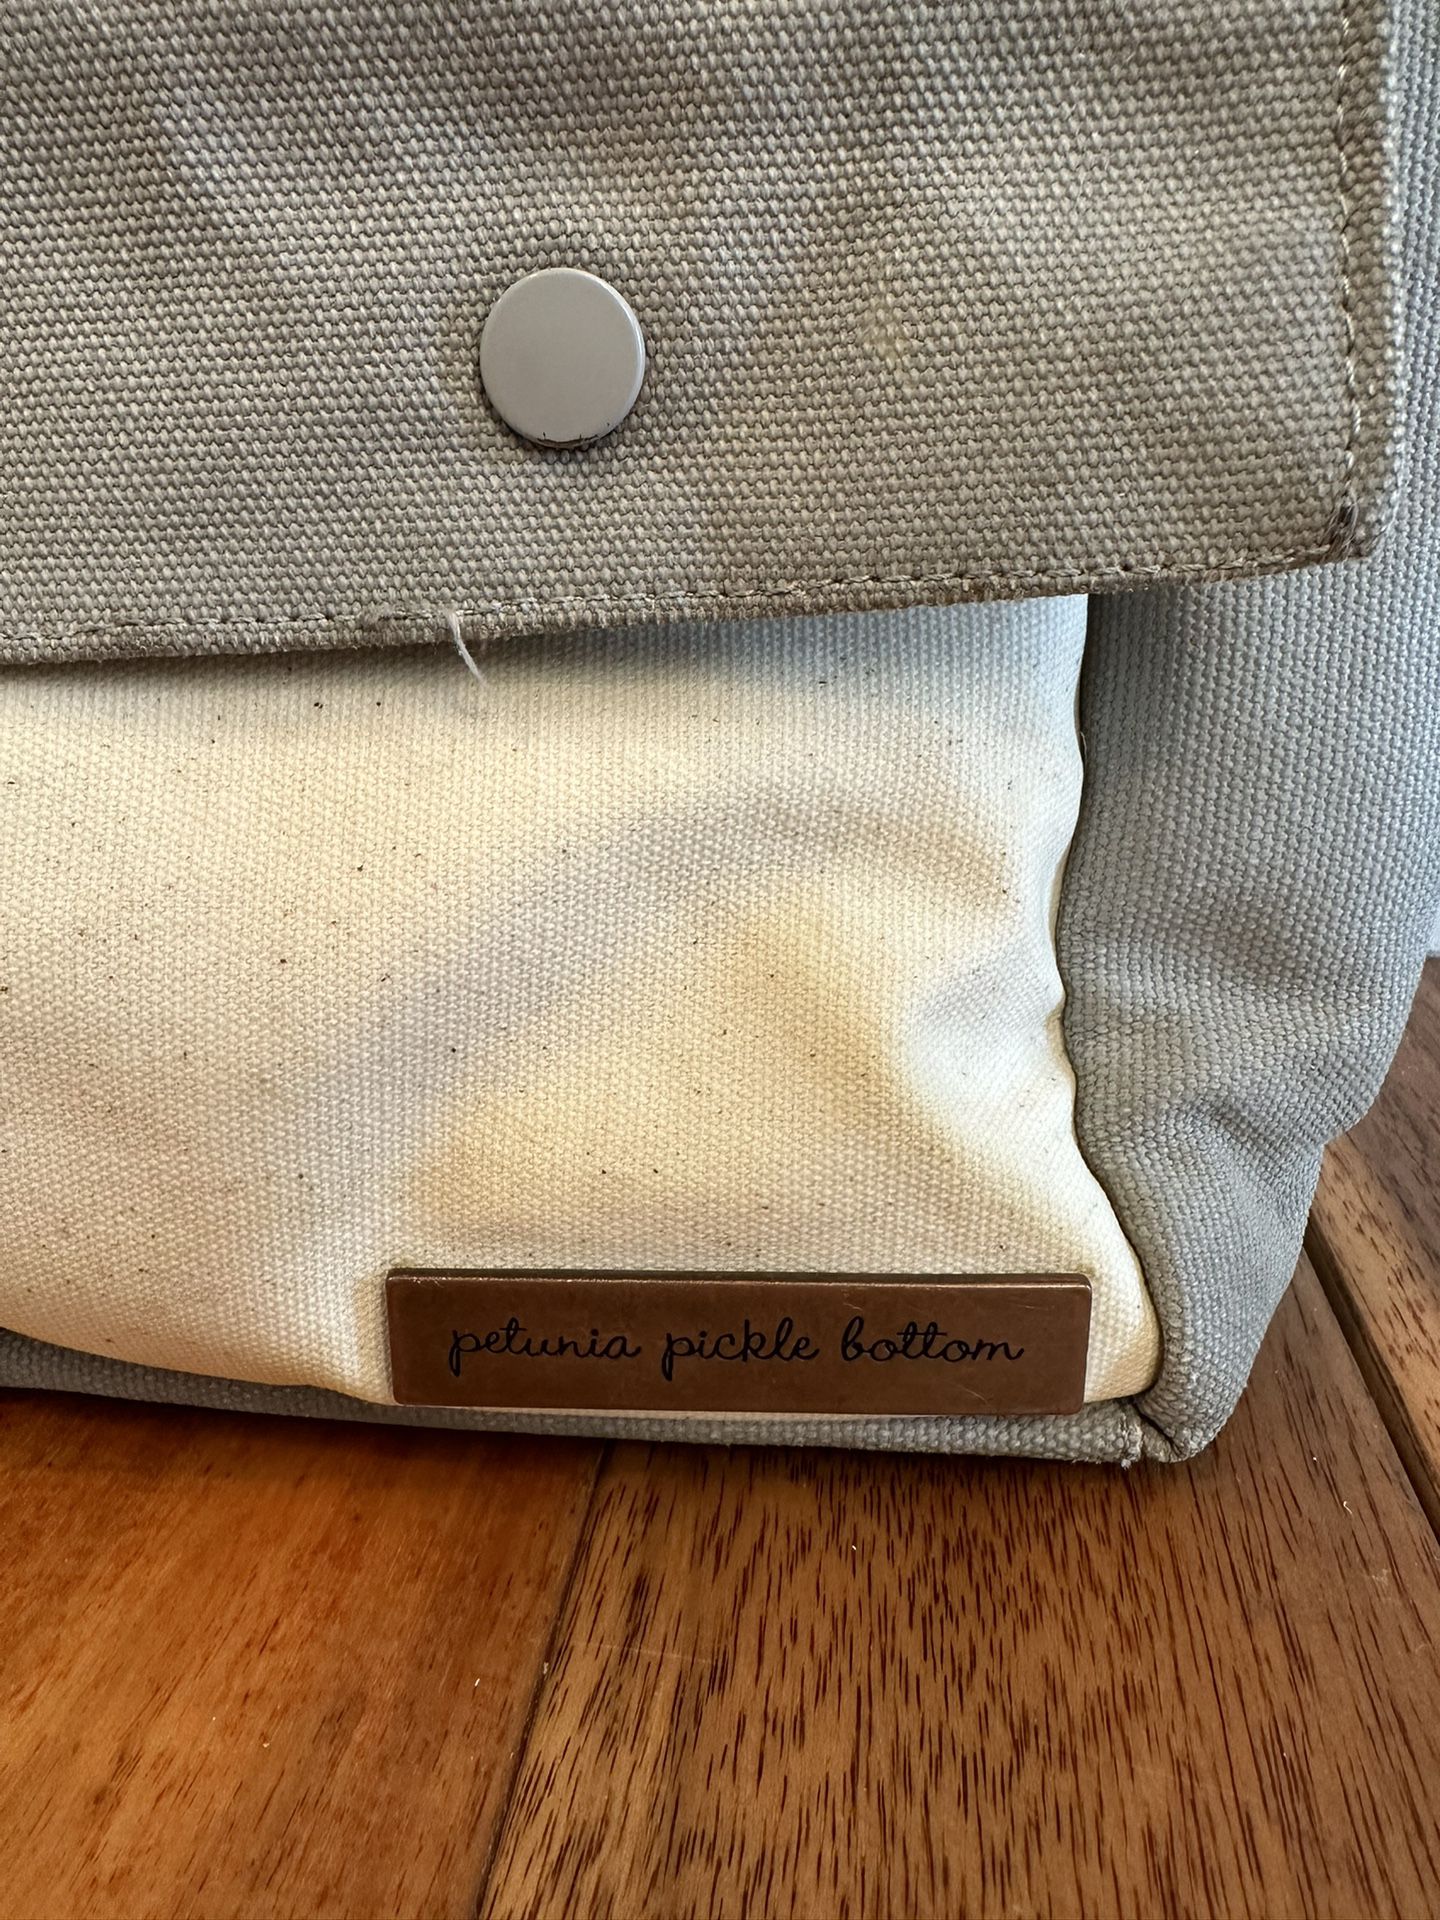 Petunia Pickle Bottom Diaper Backpack